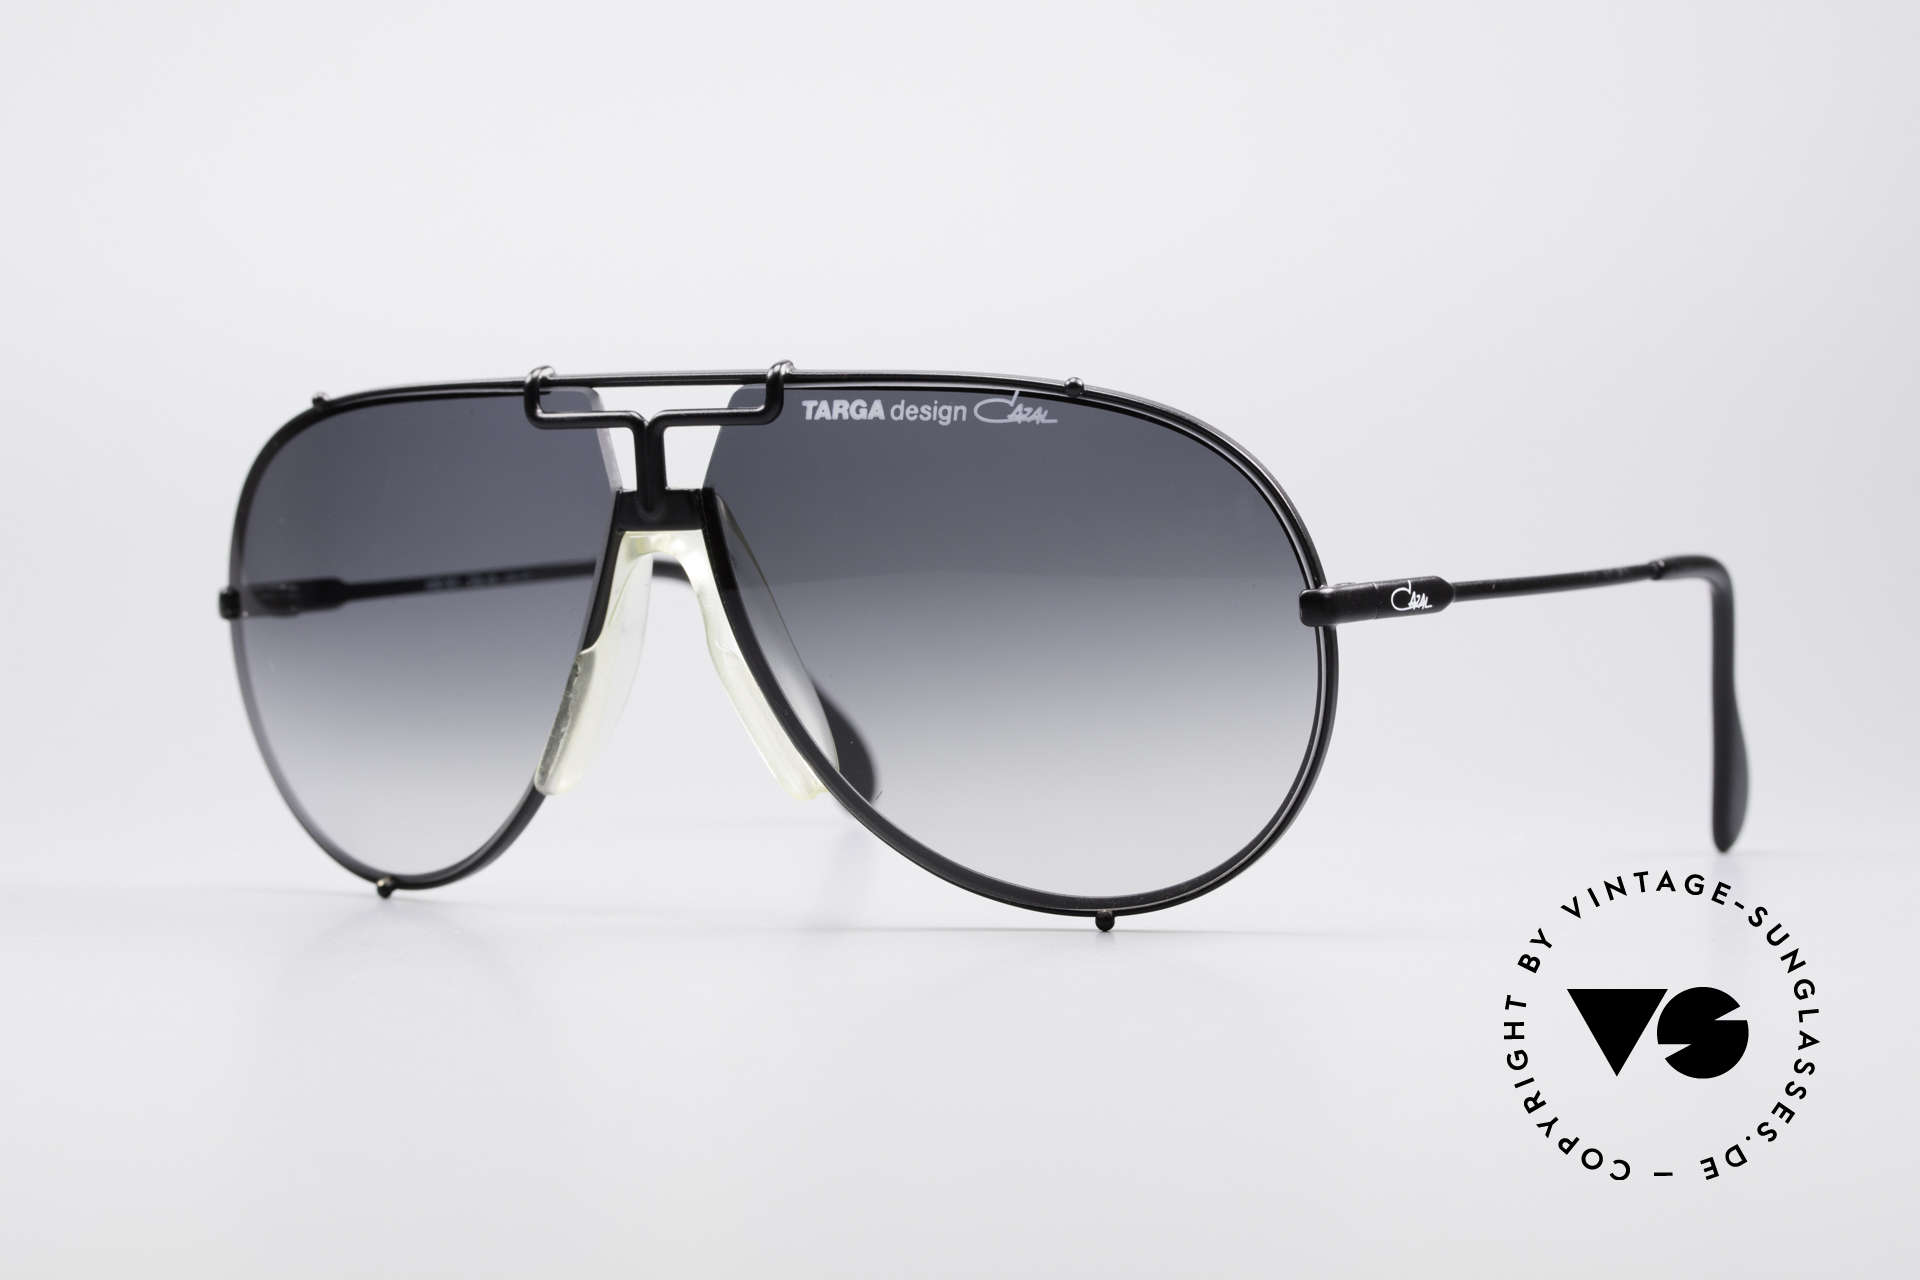 Sunglasses Cazal 901 Targa Design XL Aviator Shades West Germany